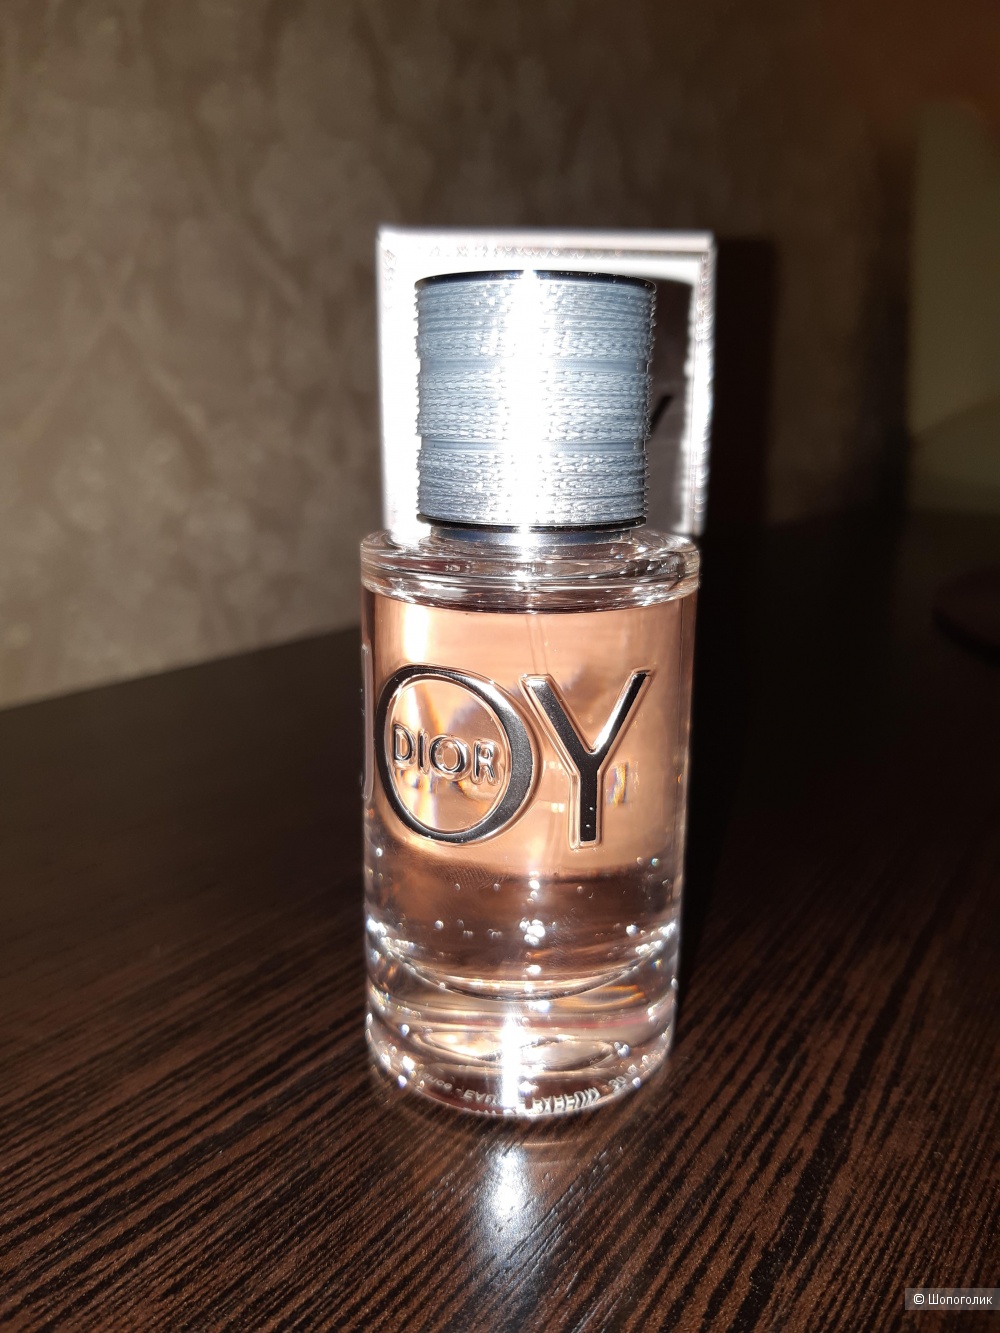 Парфюмерная вода Joy Dior, 28 ml